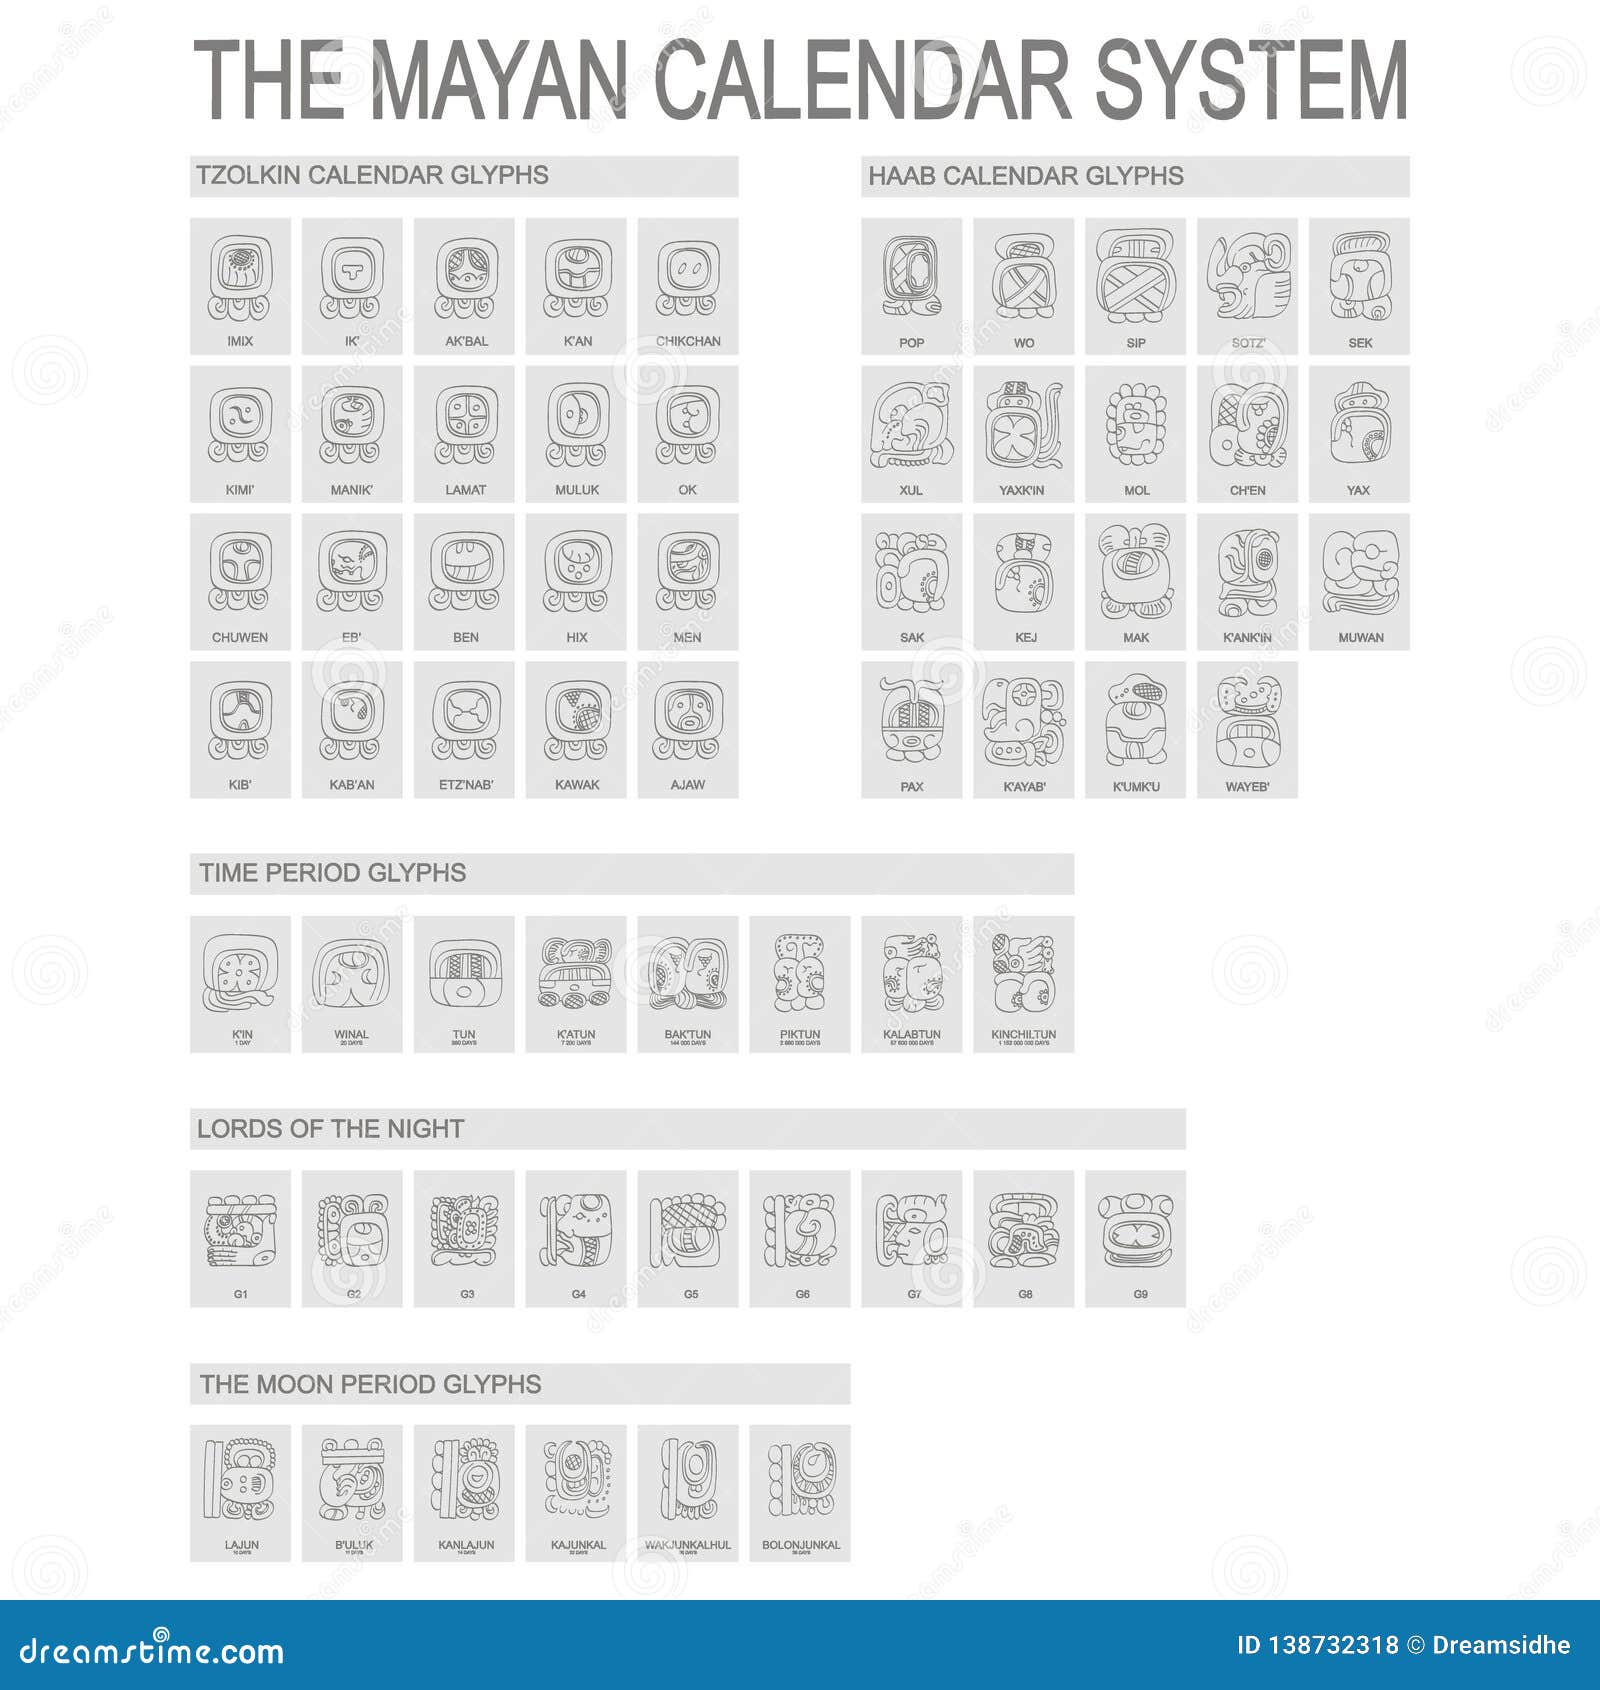 mayan calendar system and associated glyphs